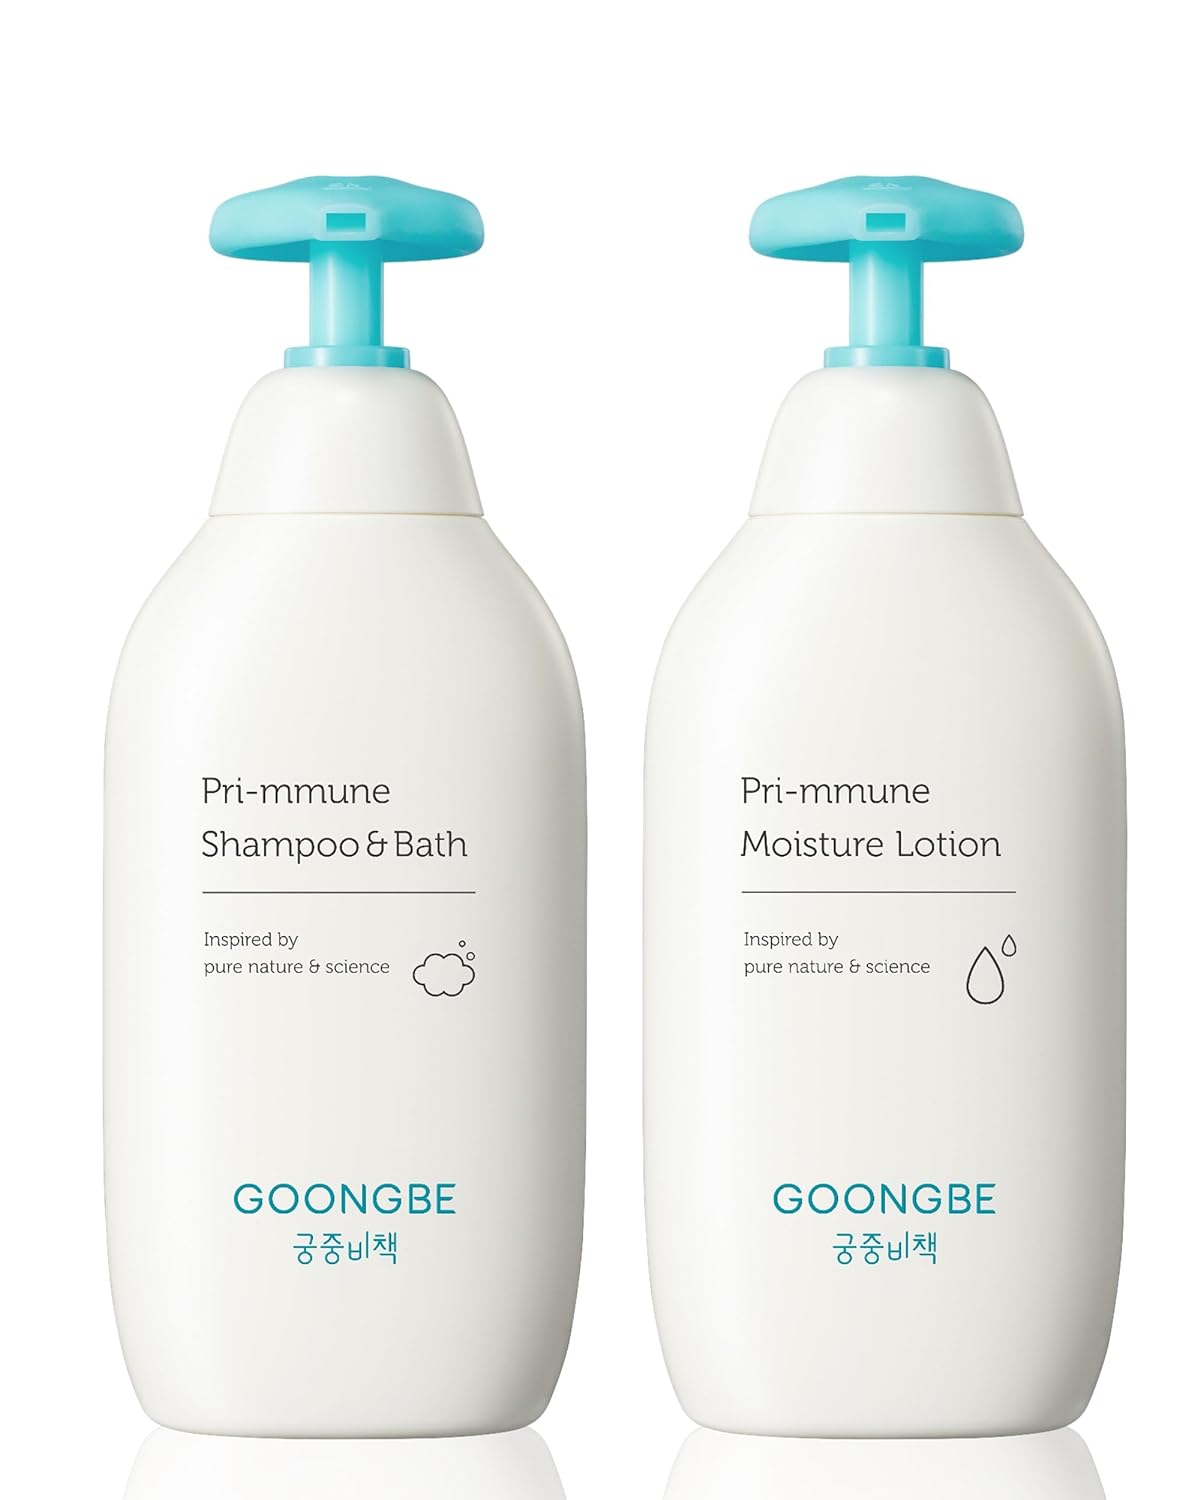 Pri-mmune Shampoo and Bath & Moisture Lotion